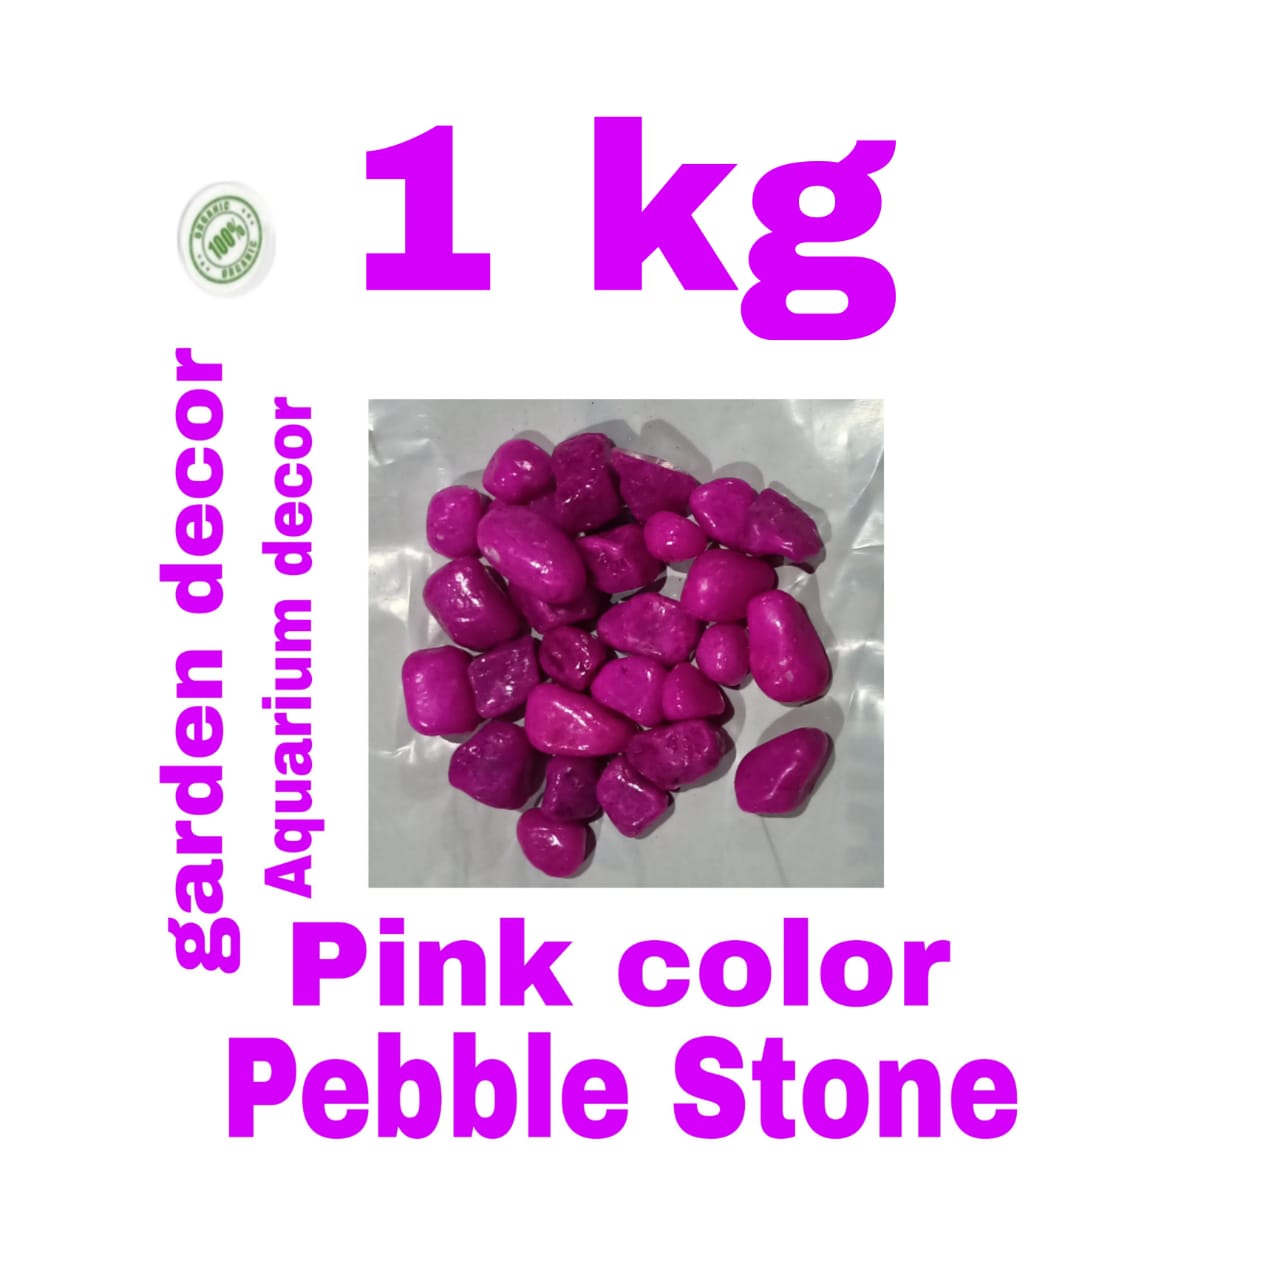 PINK COLOR PEBBLE STONE 1kg